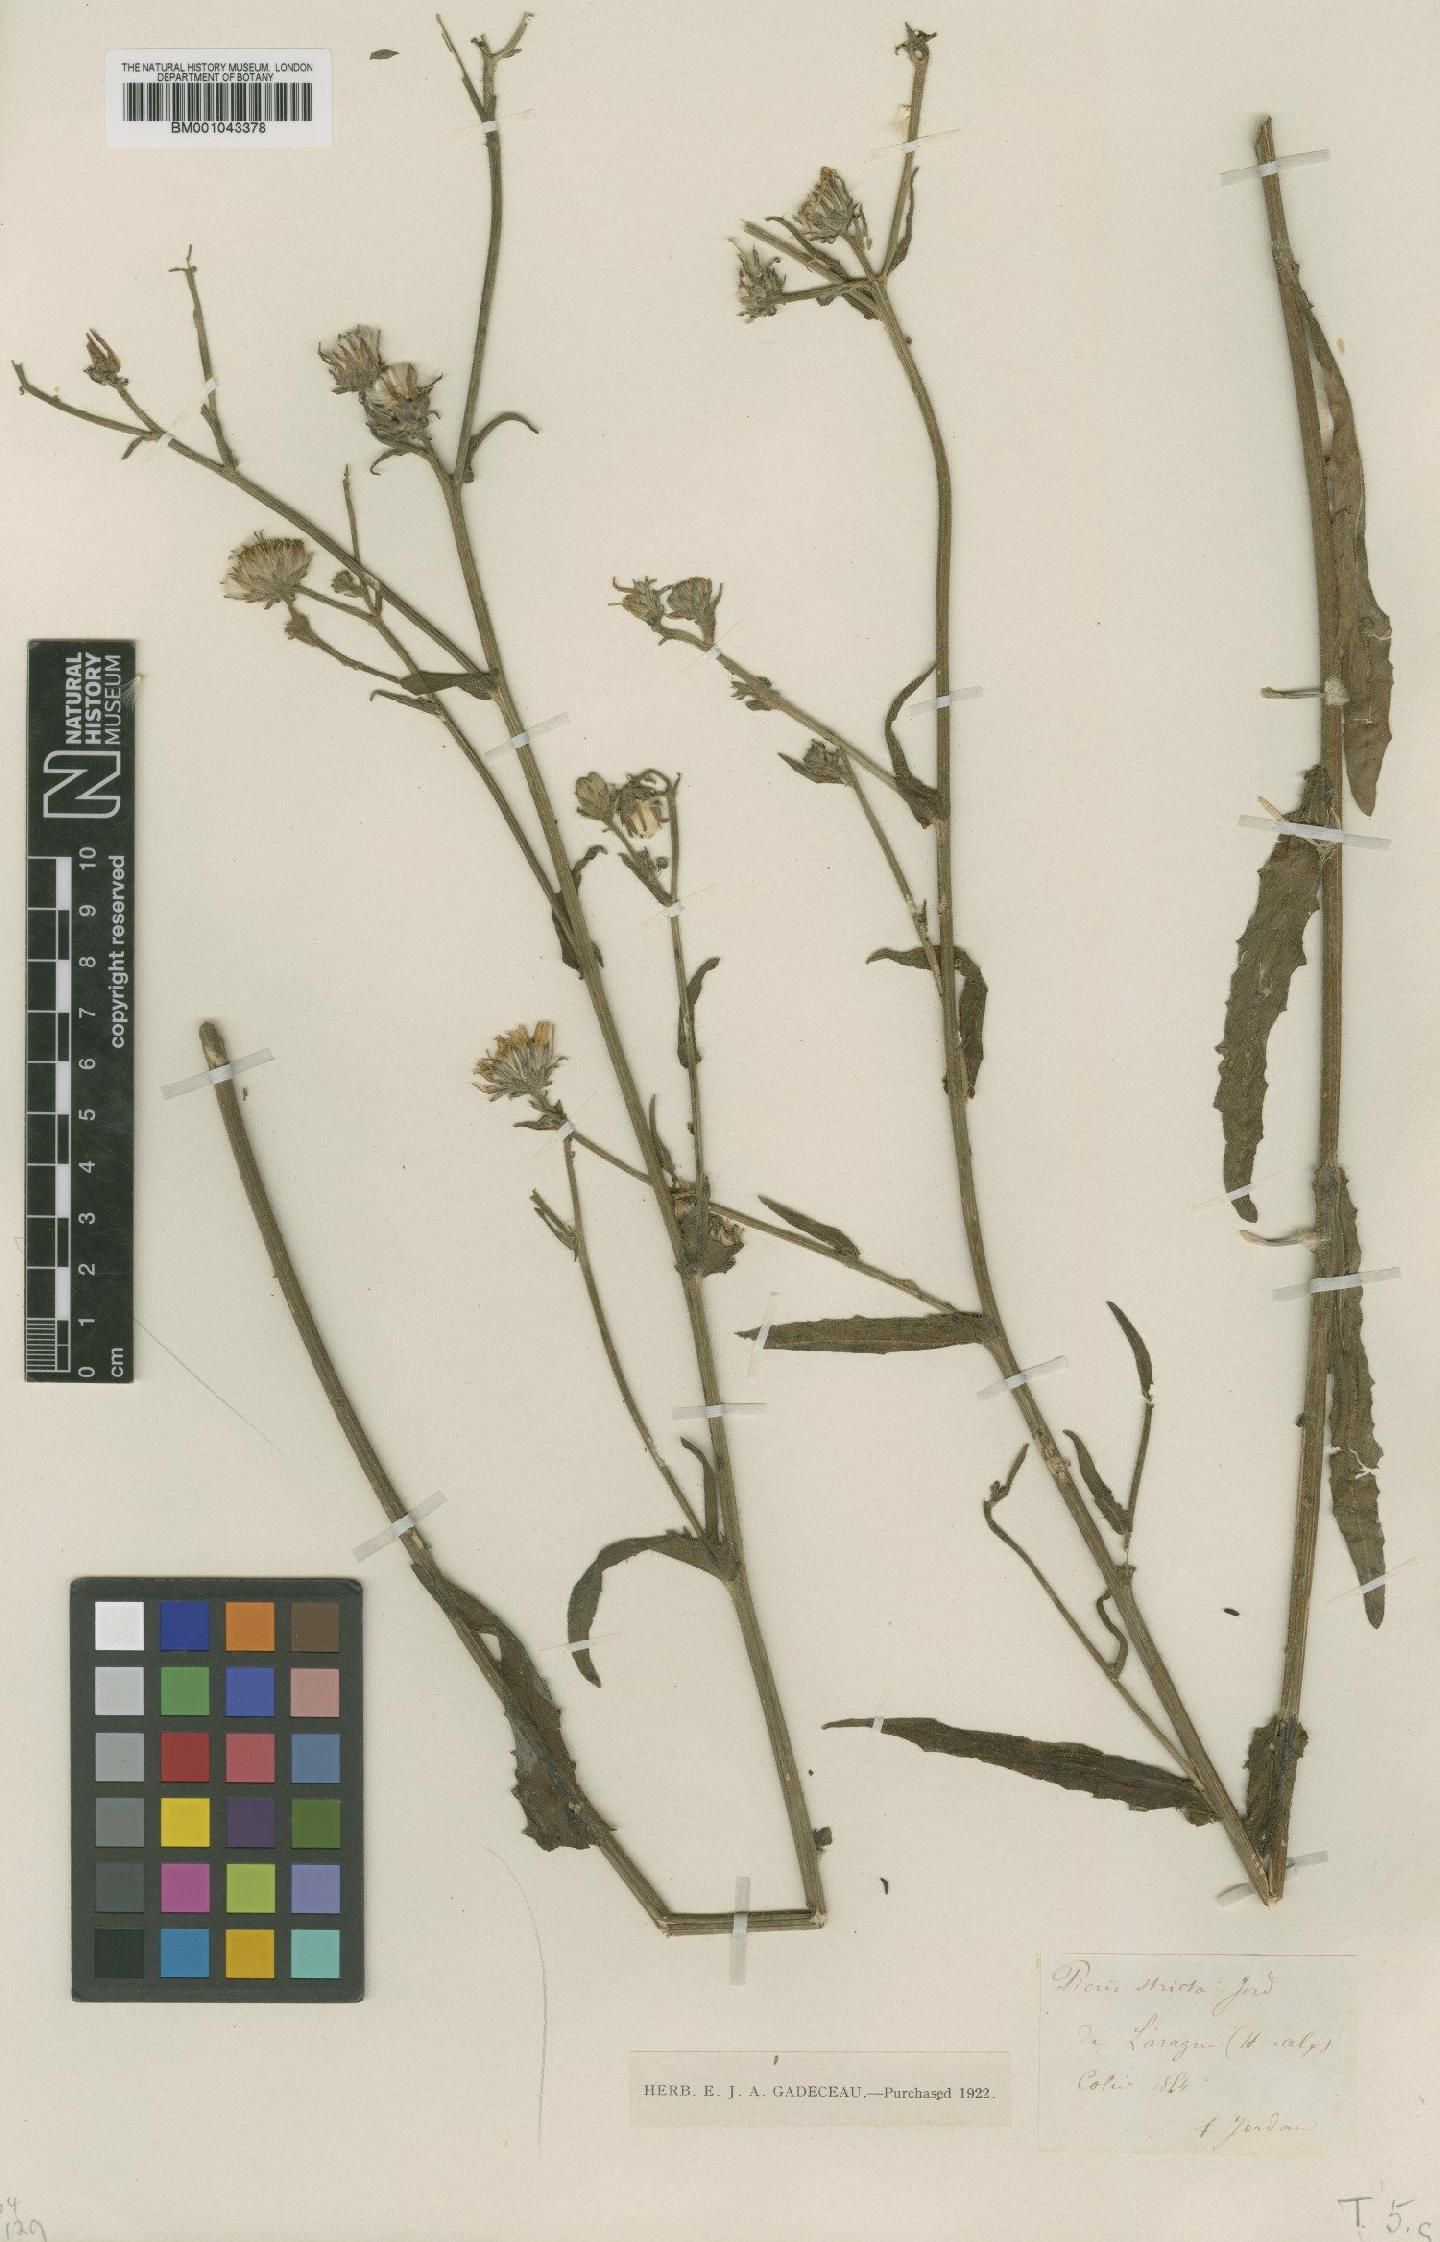 To NHMUK collection (Picris hieracioides subsp. spinulosa (Bertol.) Arcang; Type; NHMUK:ecatalogue:1997617)